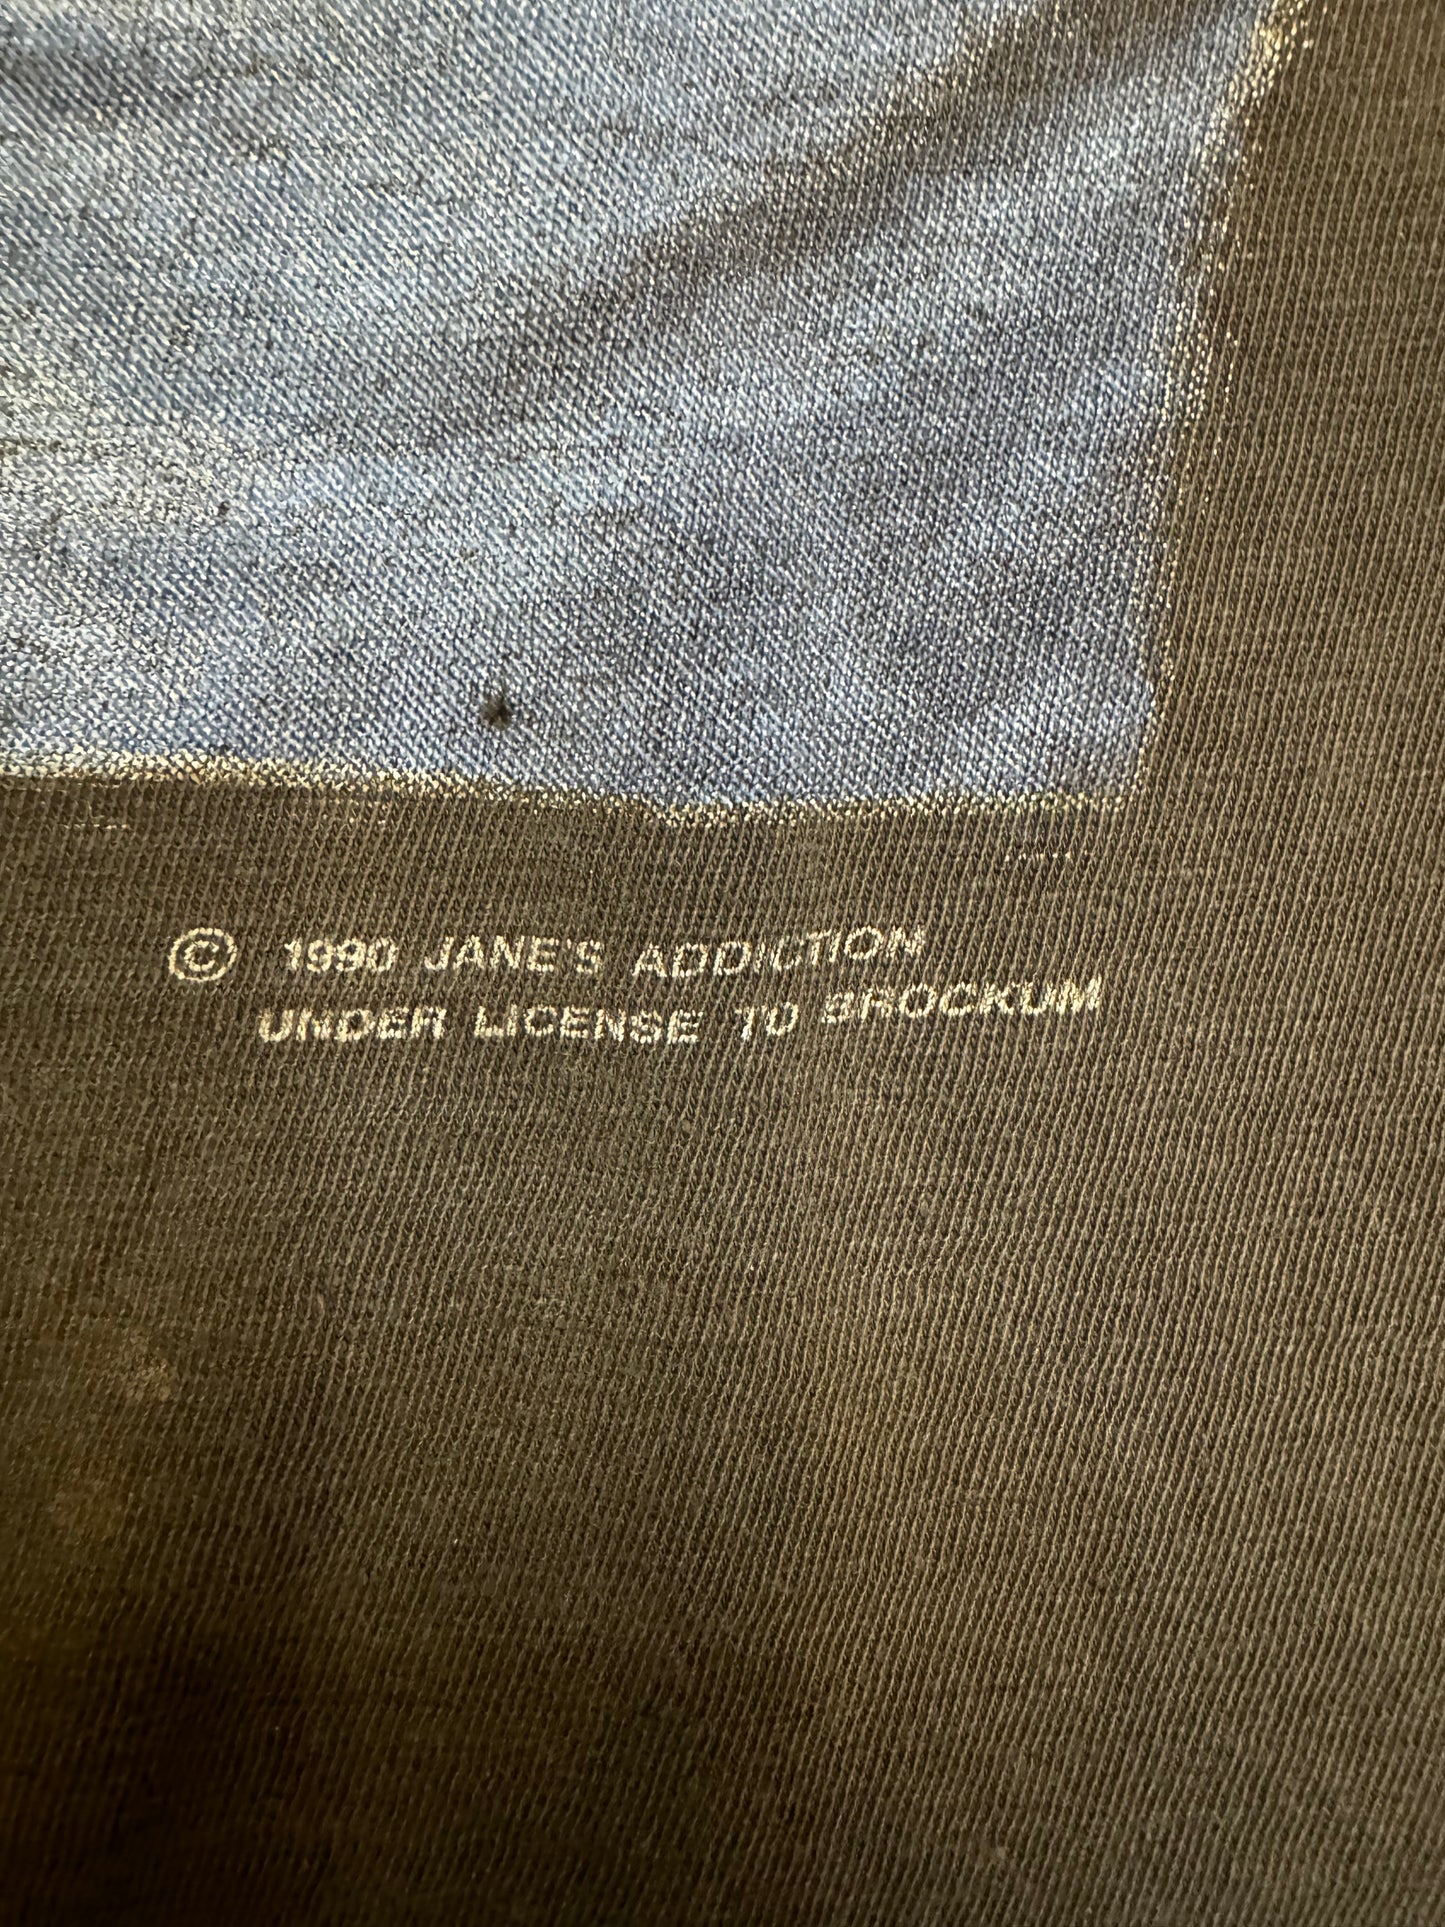 1990 Jane's Addiction Vintage T Shirt